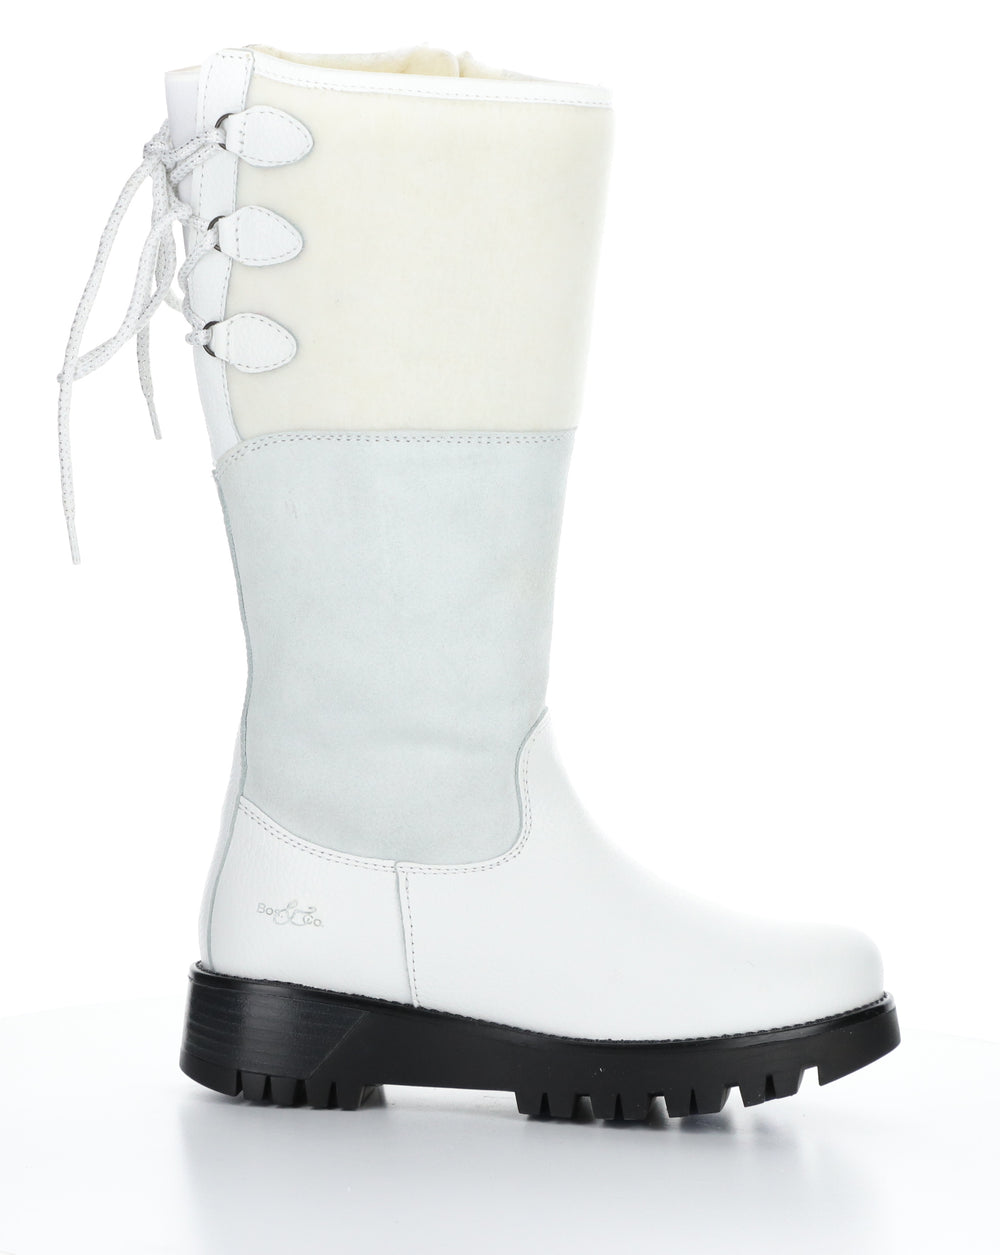 GOOSE PRIMA WHITE/ICE/MARBLE Round Toe Boots